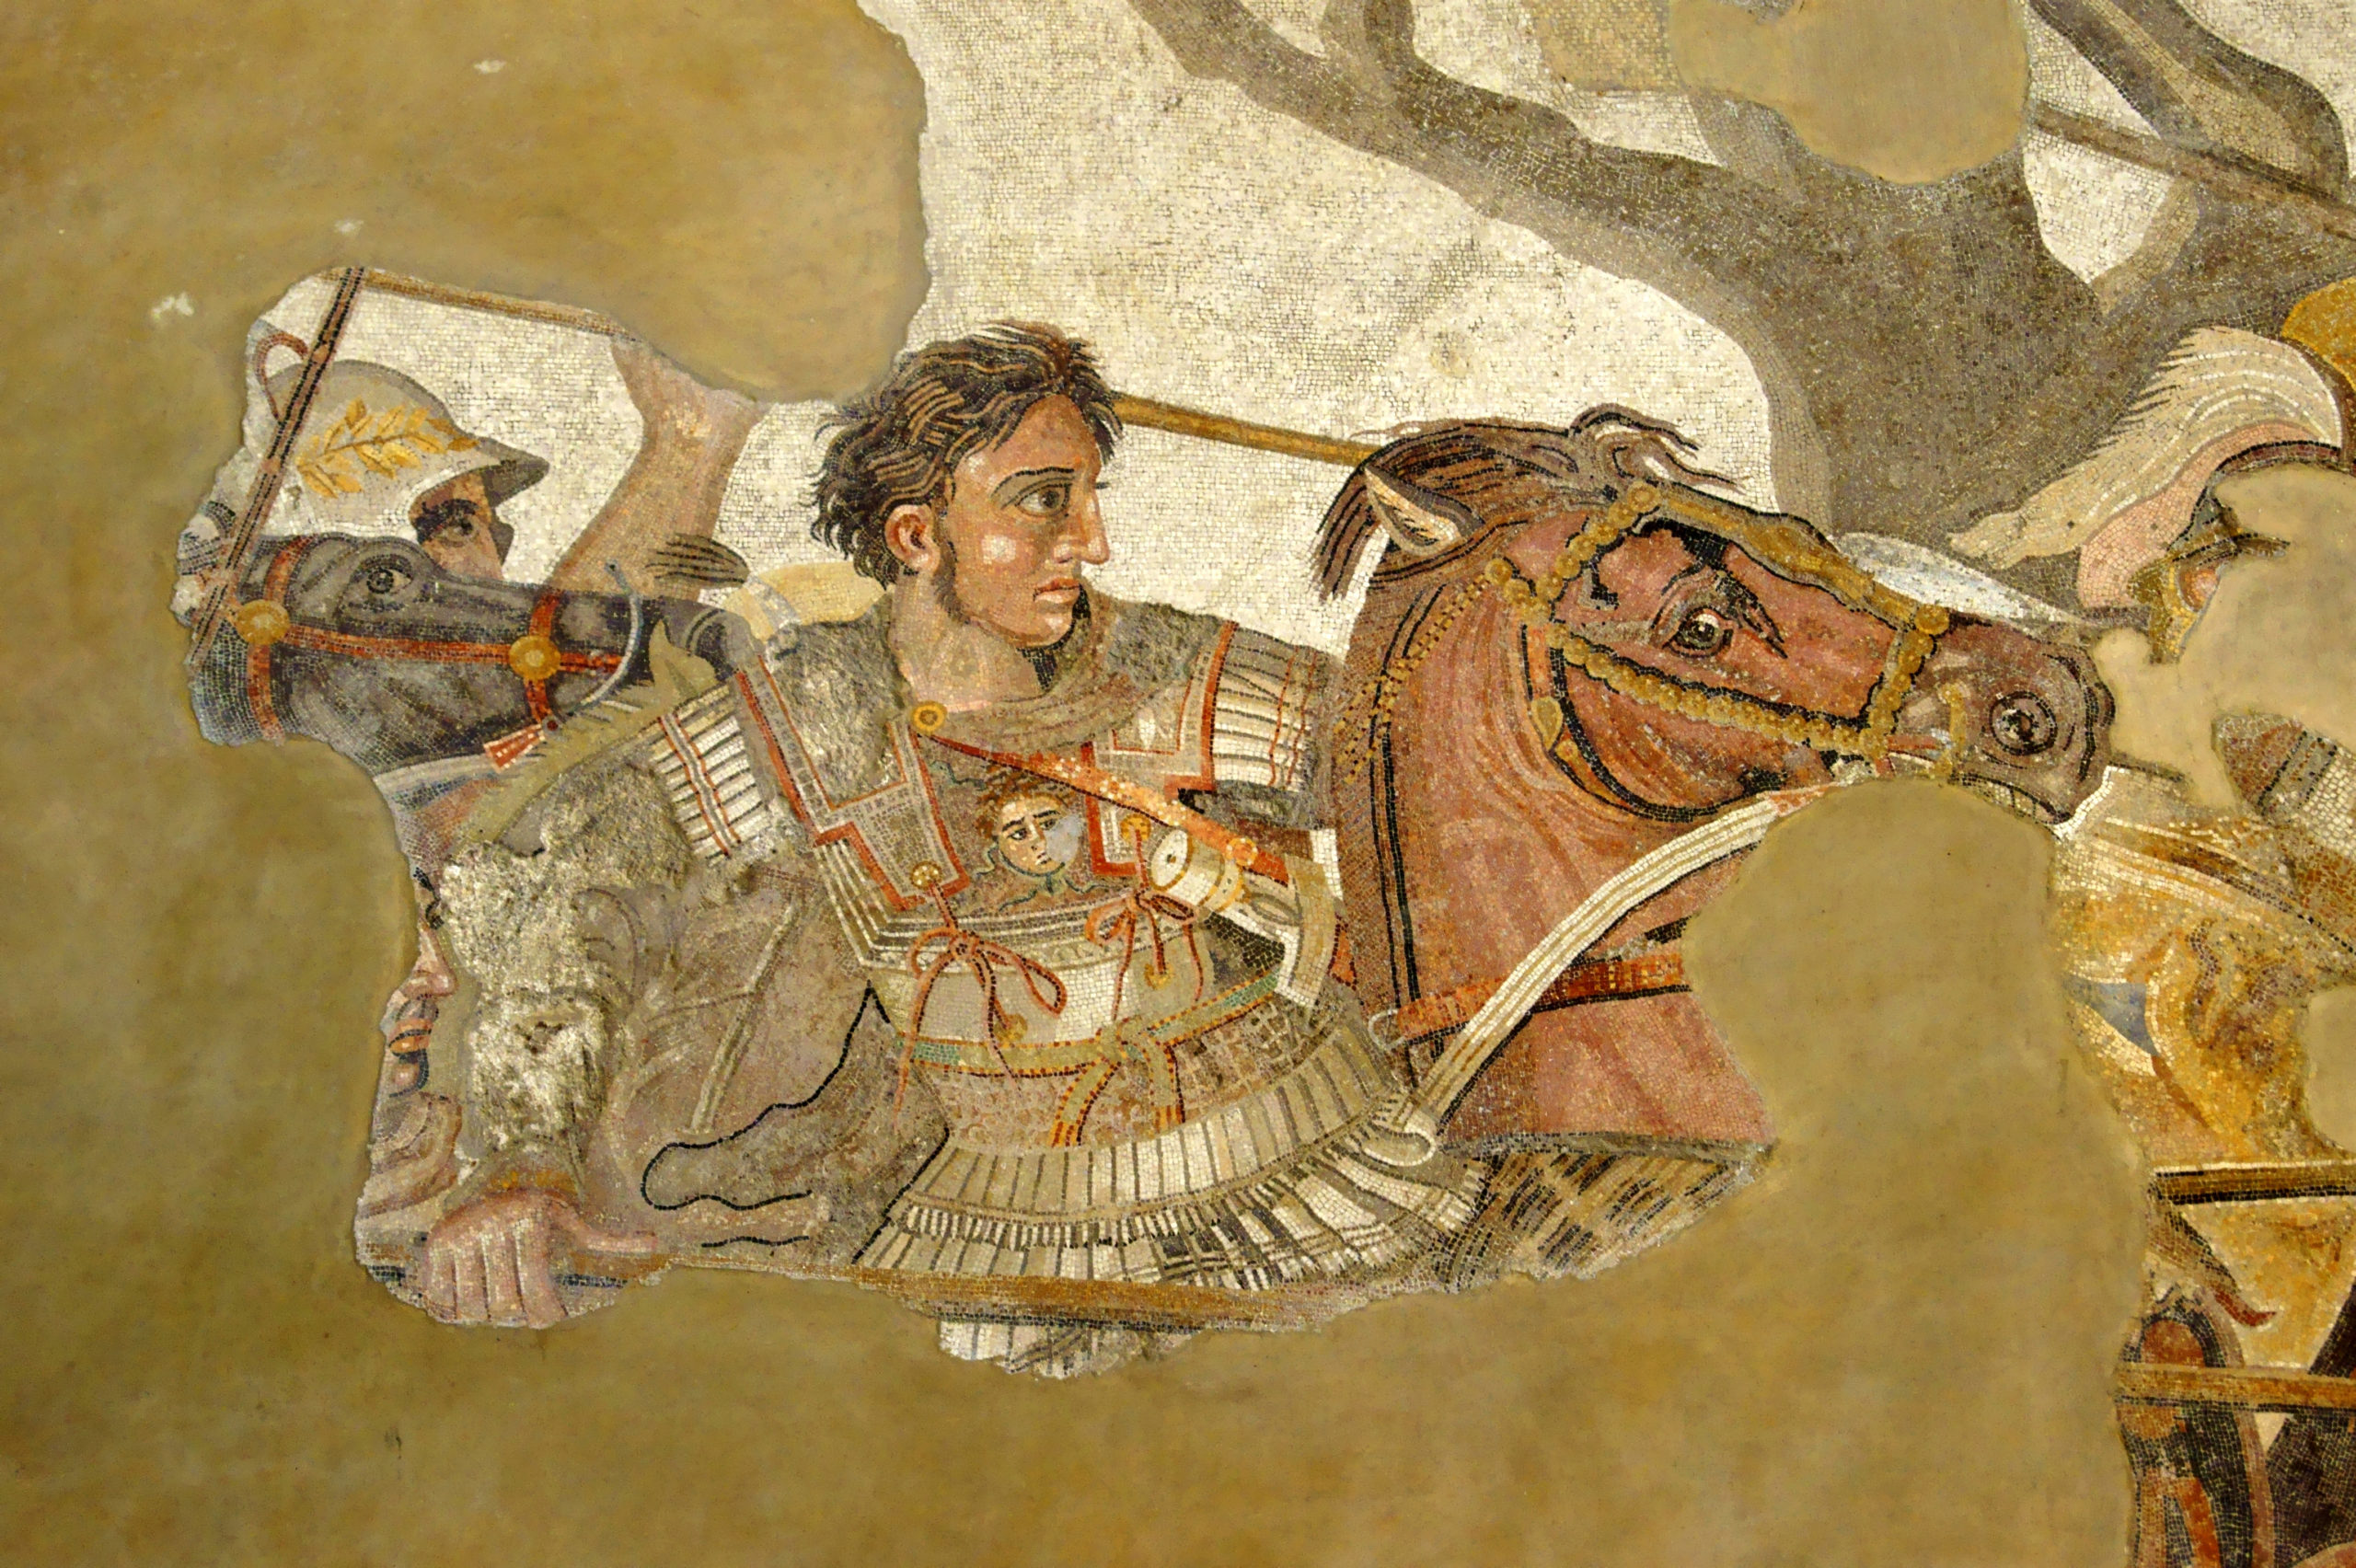 Leaders of Men – Inspiring Words from Alexander the Great